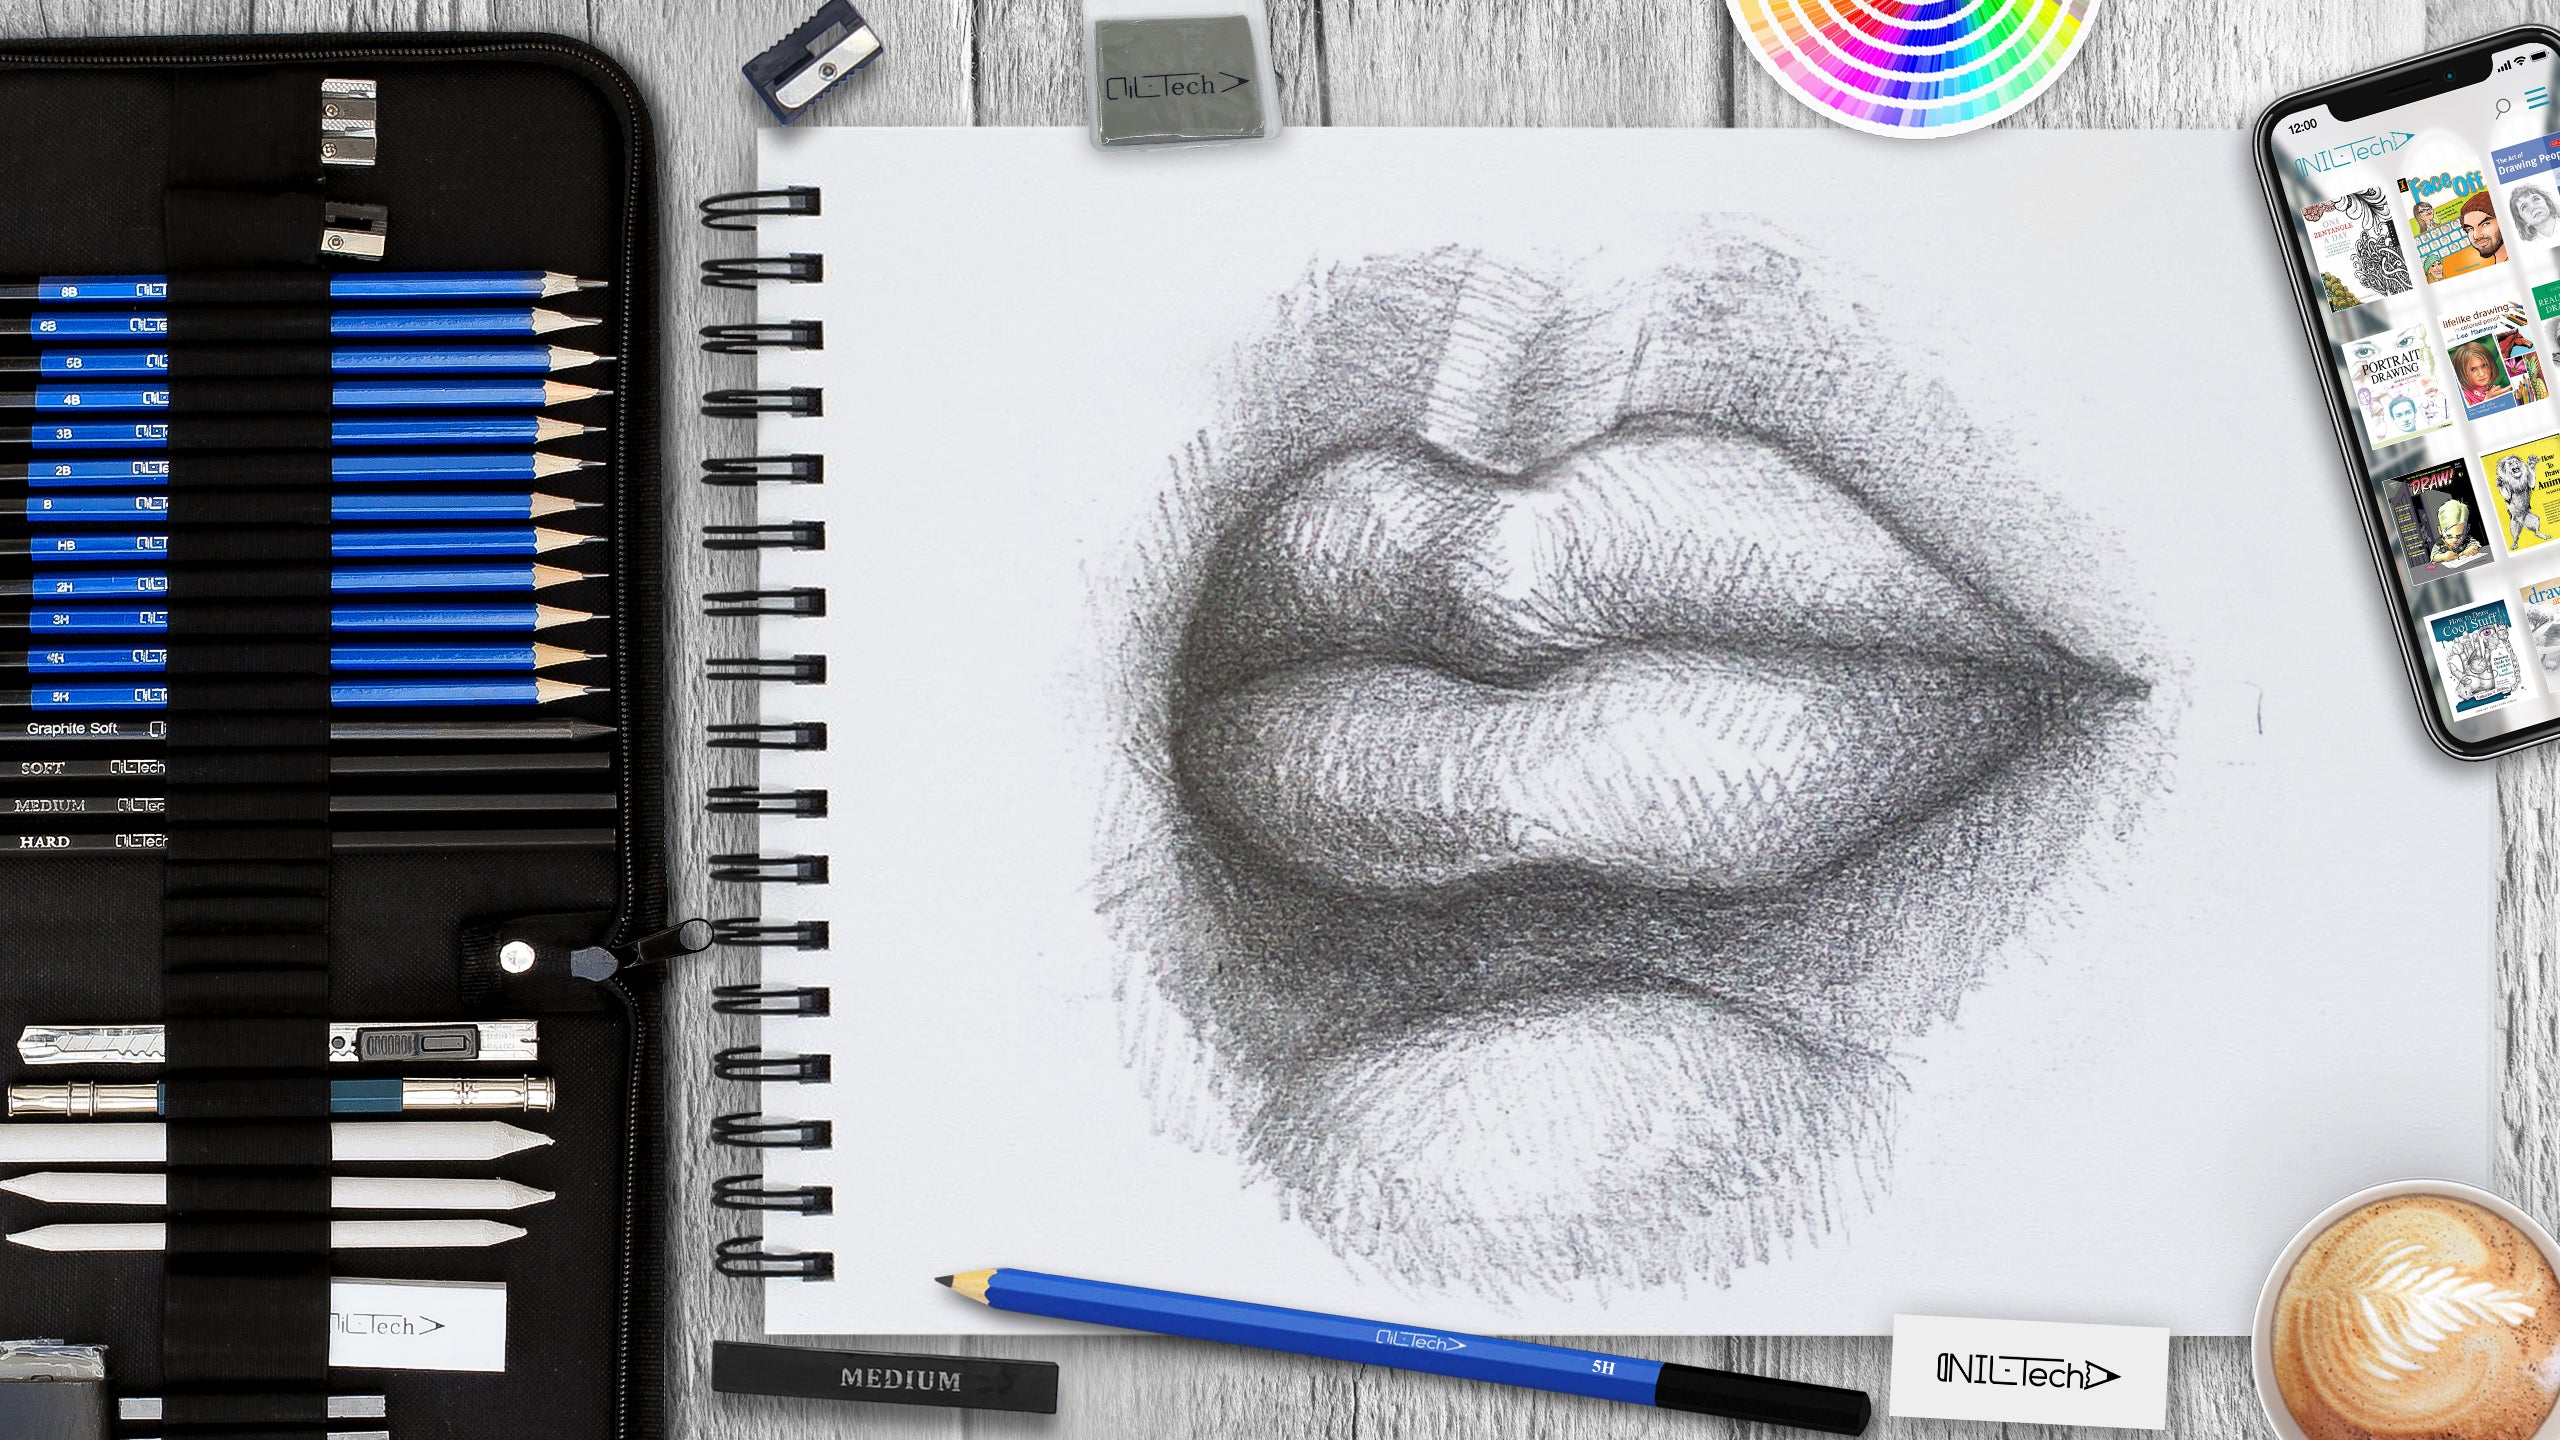 lip drawing